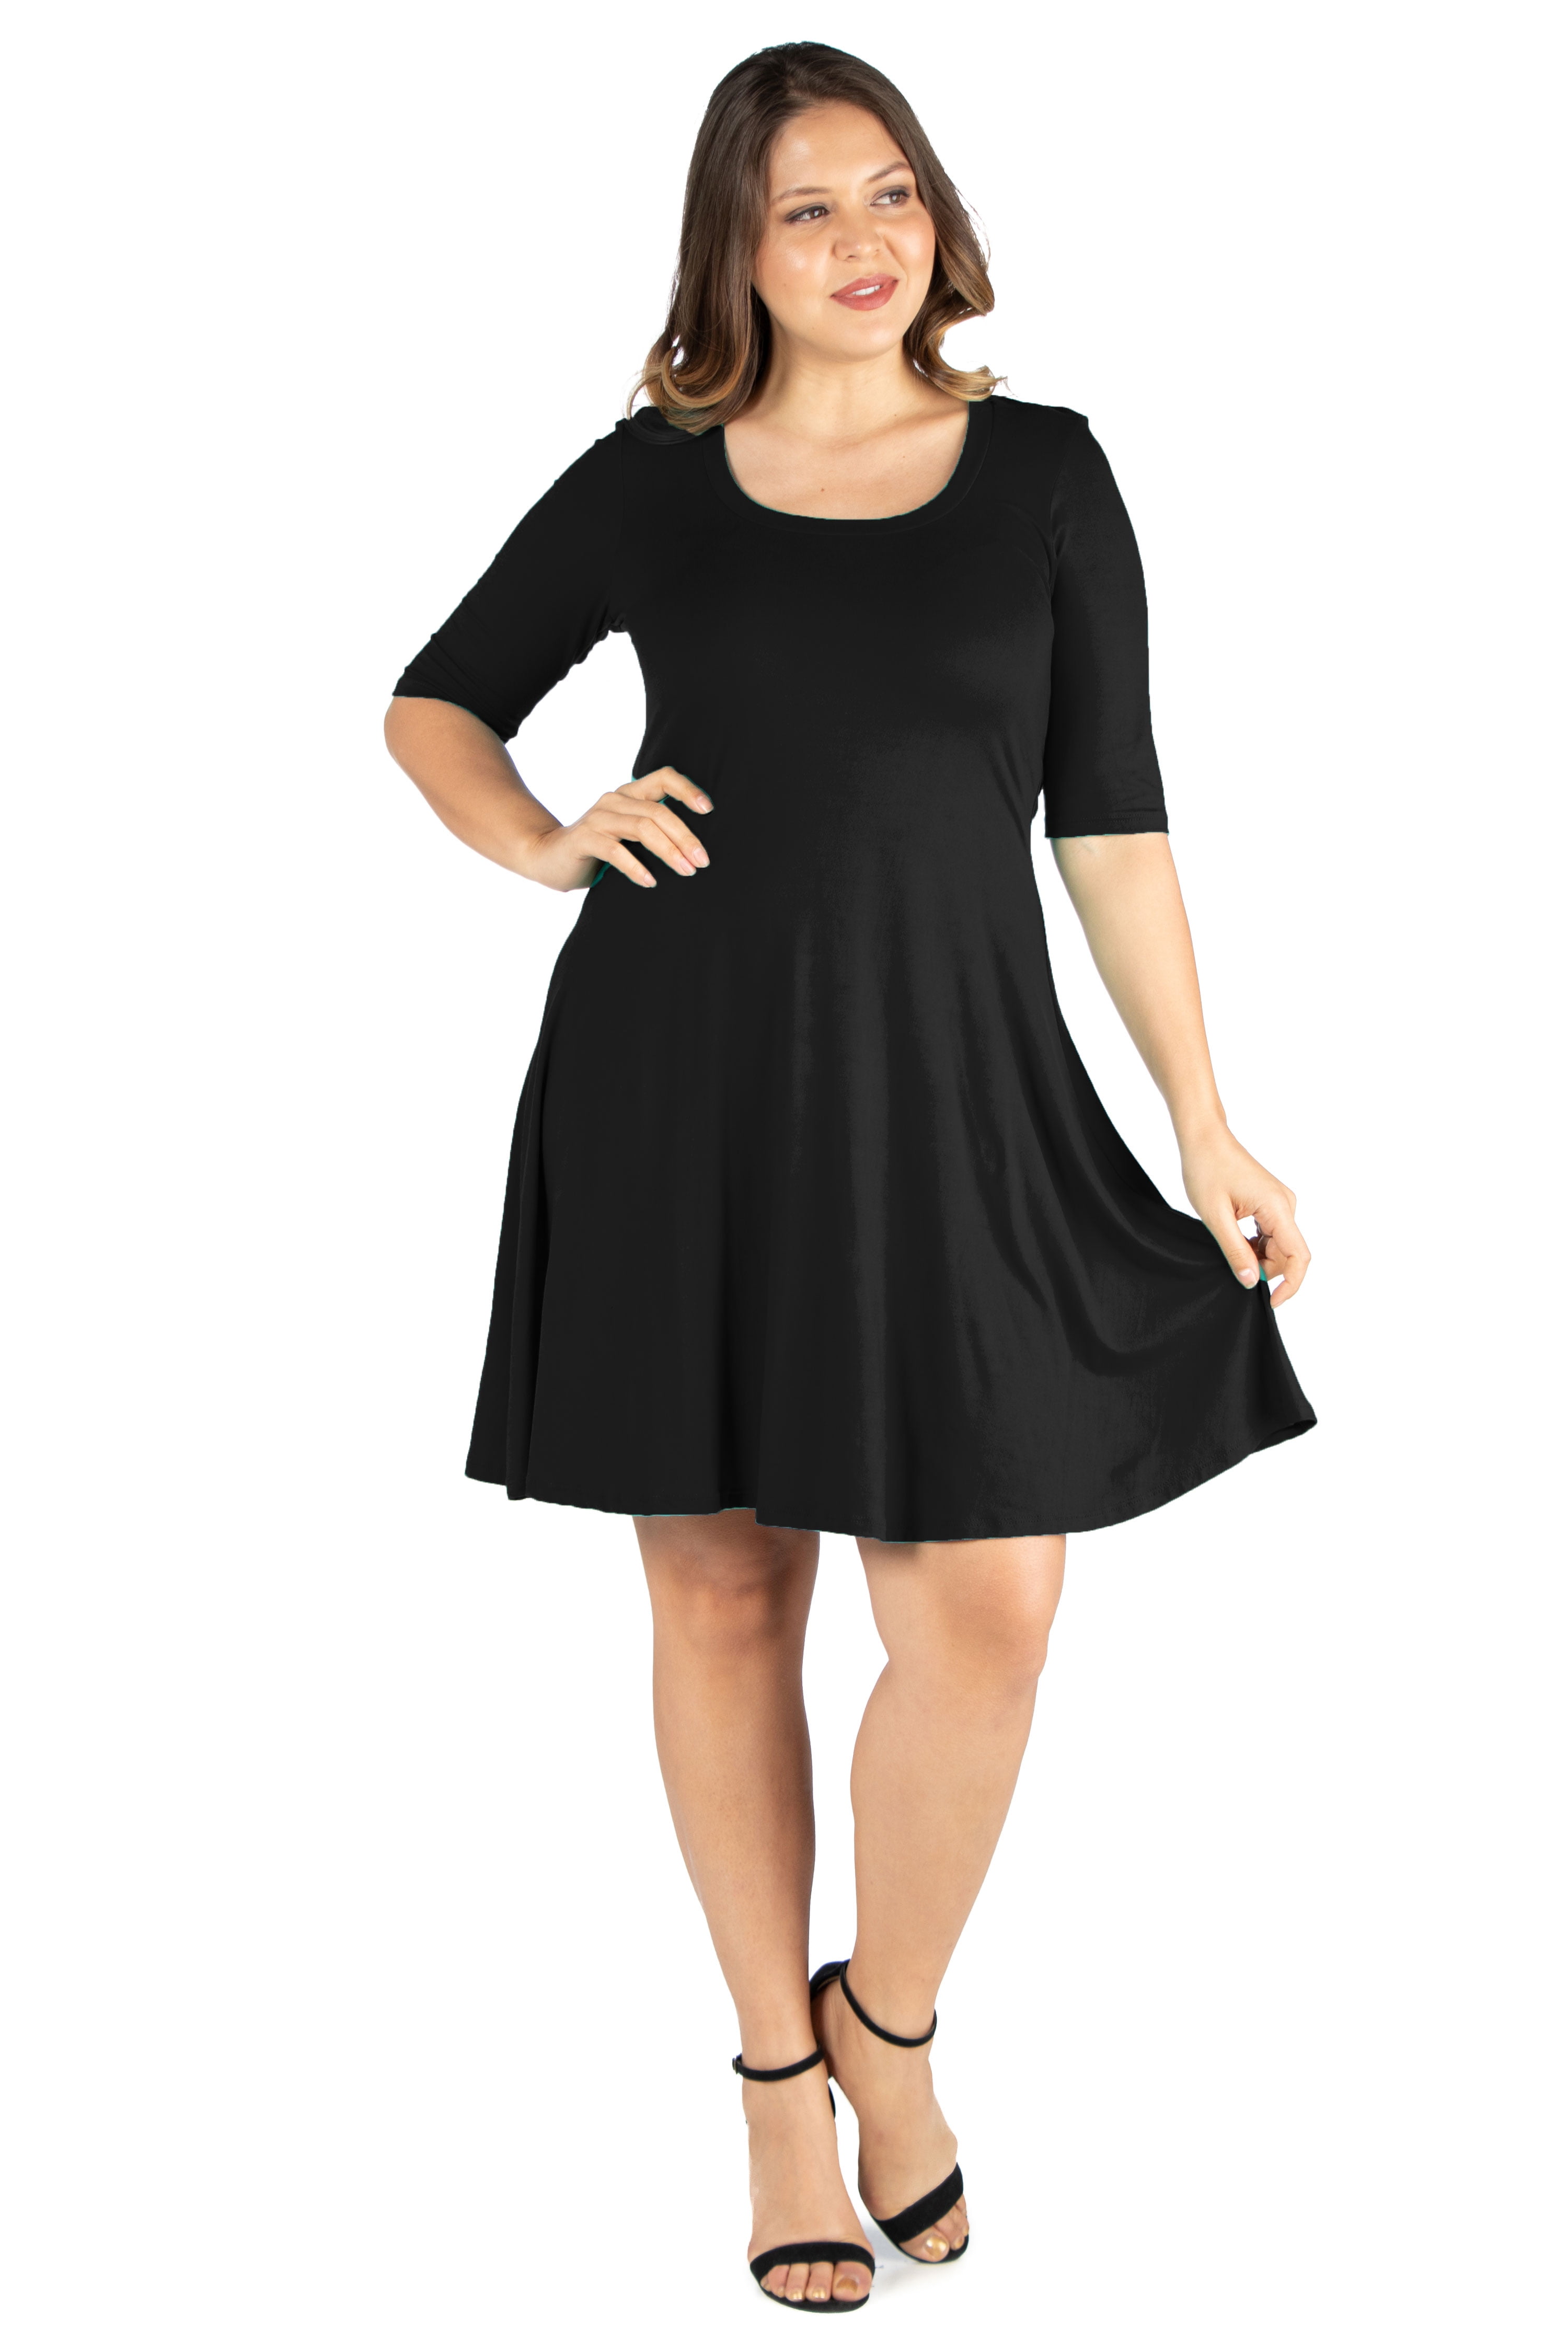 24/7 Comfort Appare Elbow Sleeve Knee Length Dress - Walmart.com